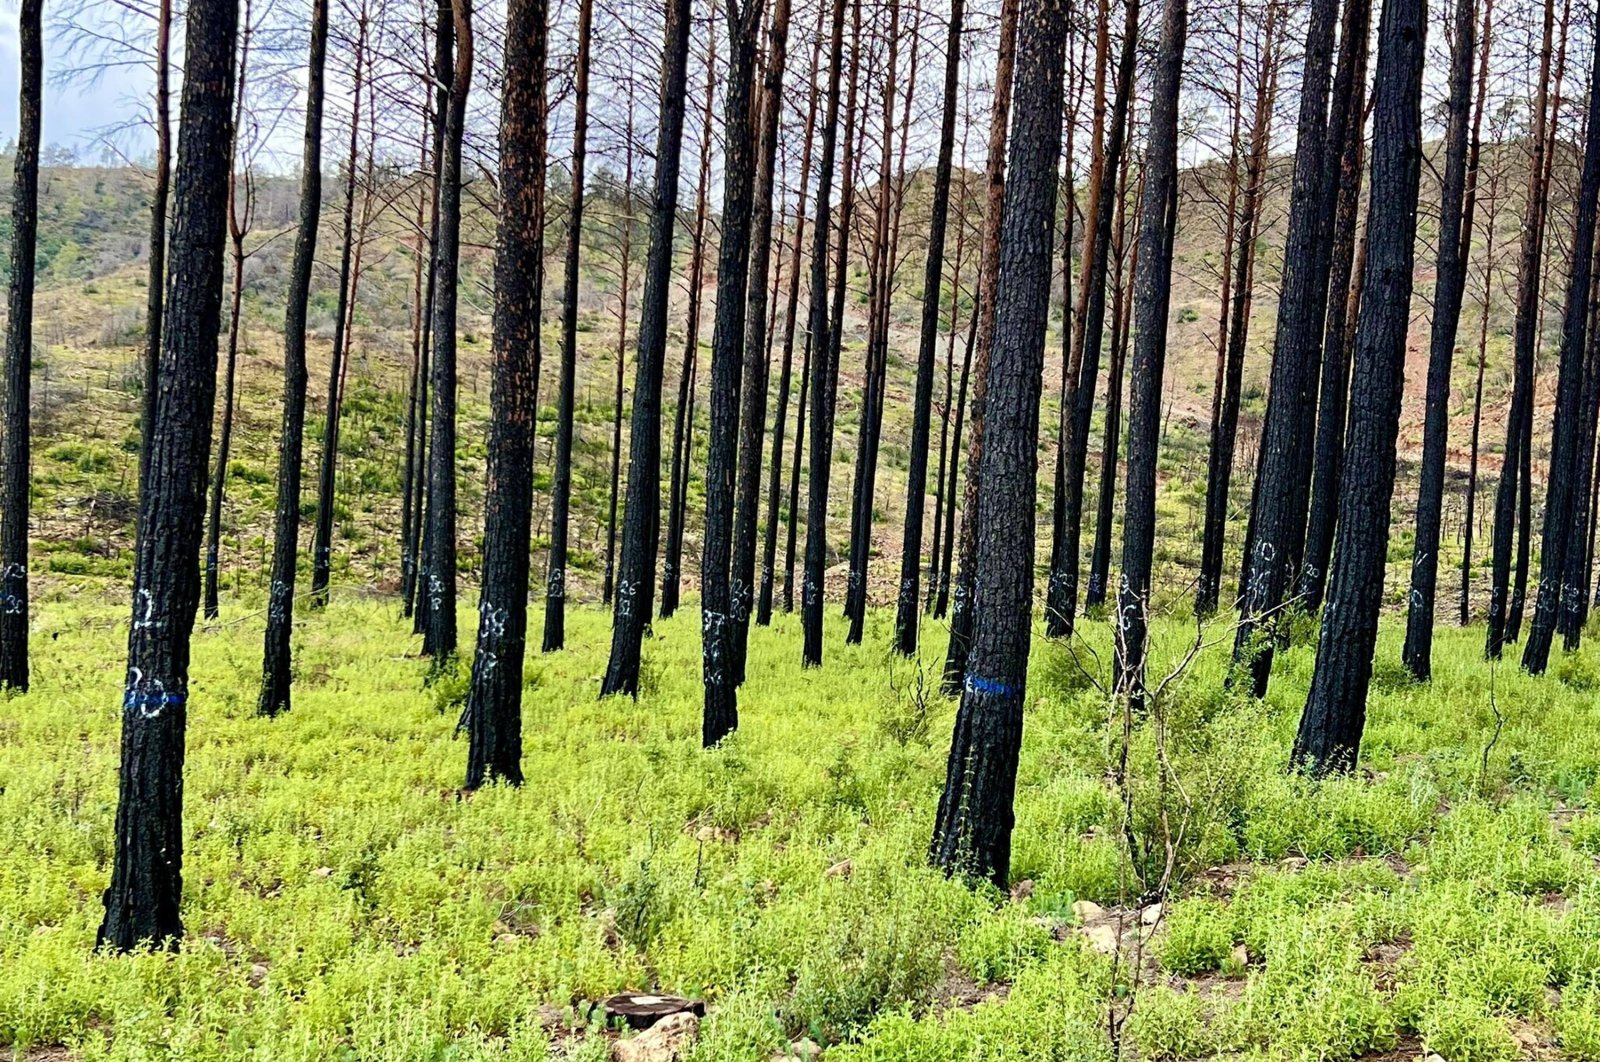 Hutan Marmaris Türkiye menjadi hijau setelah kebakaran hutan yang menghancurkan